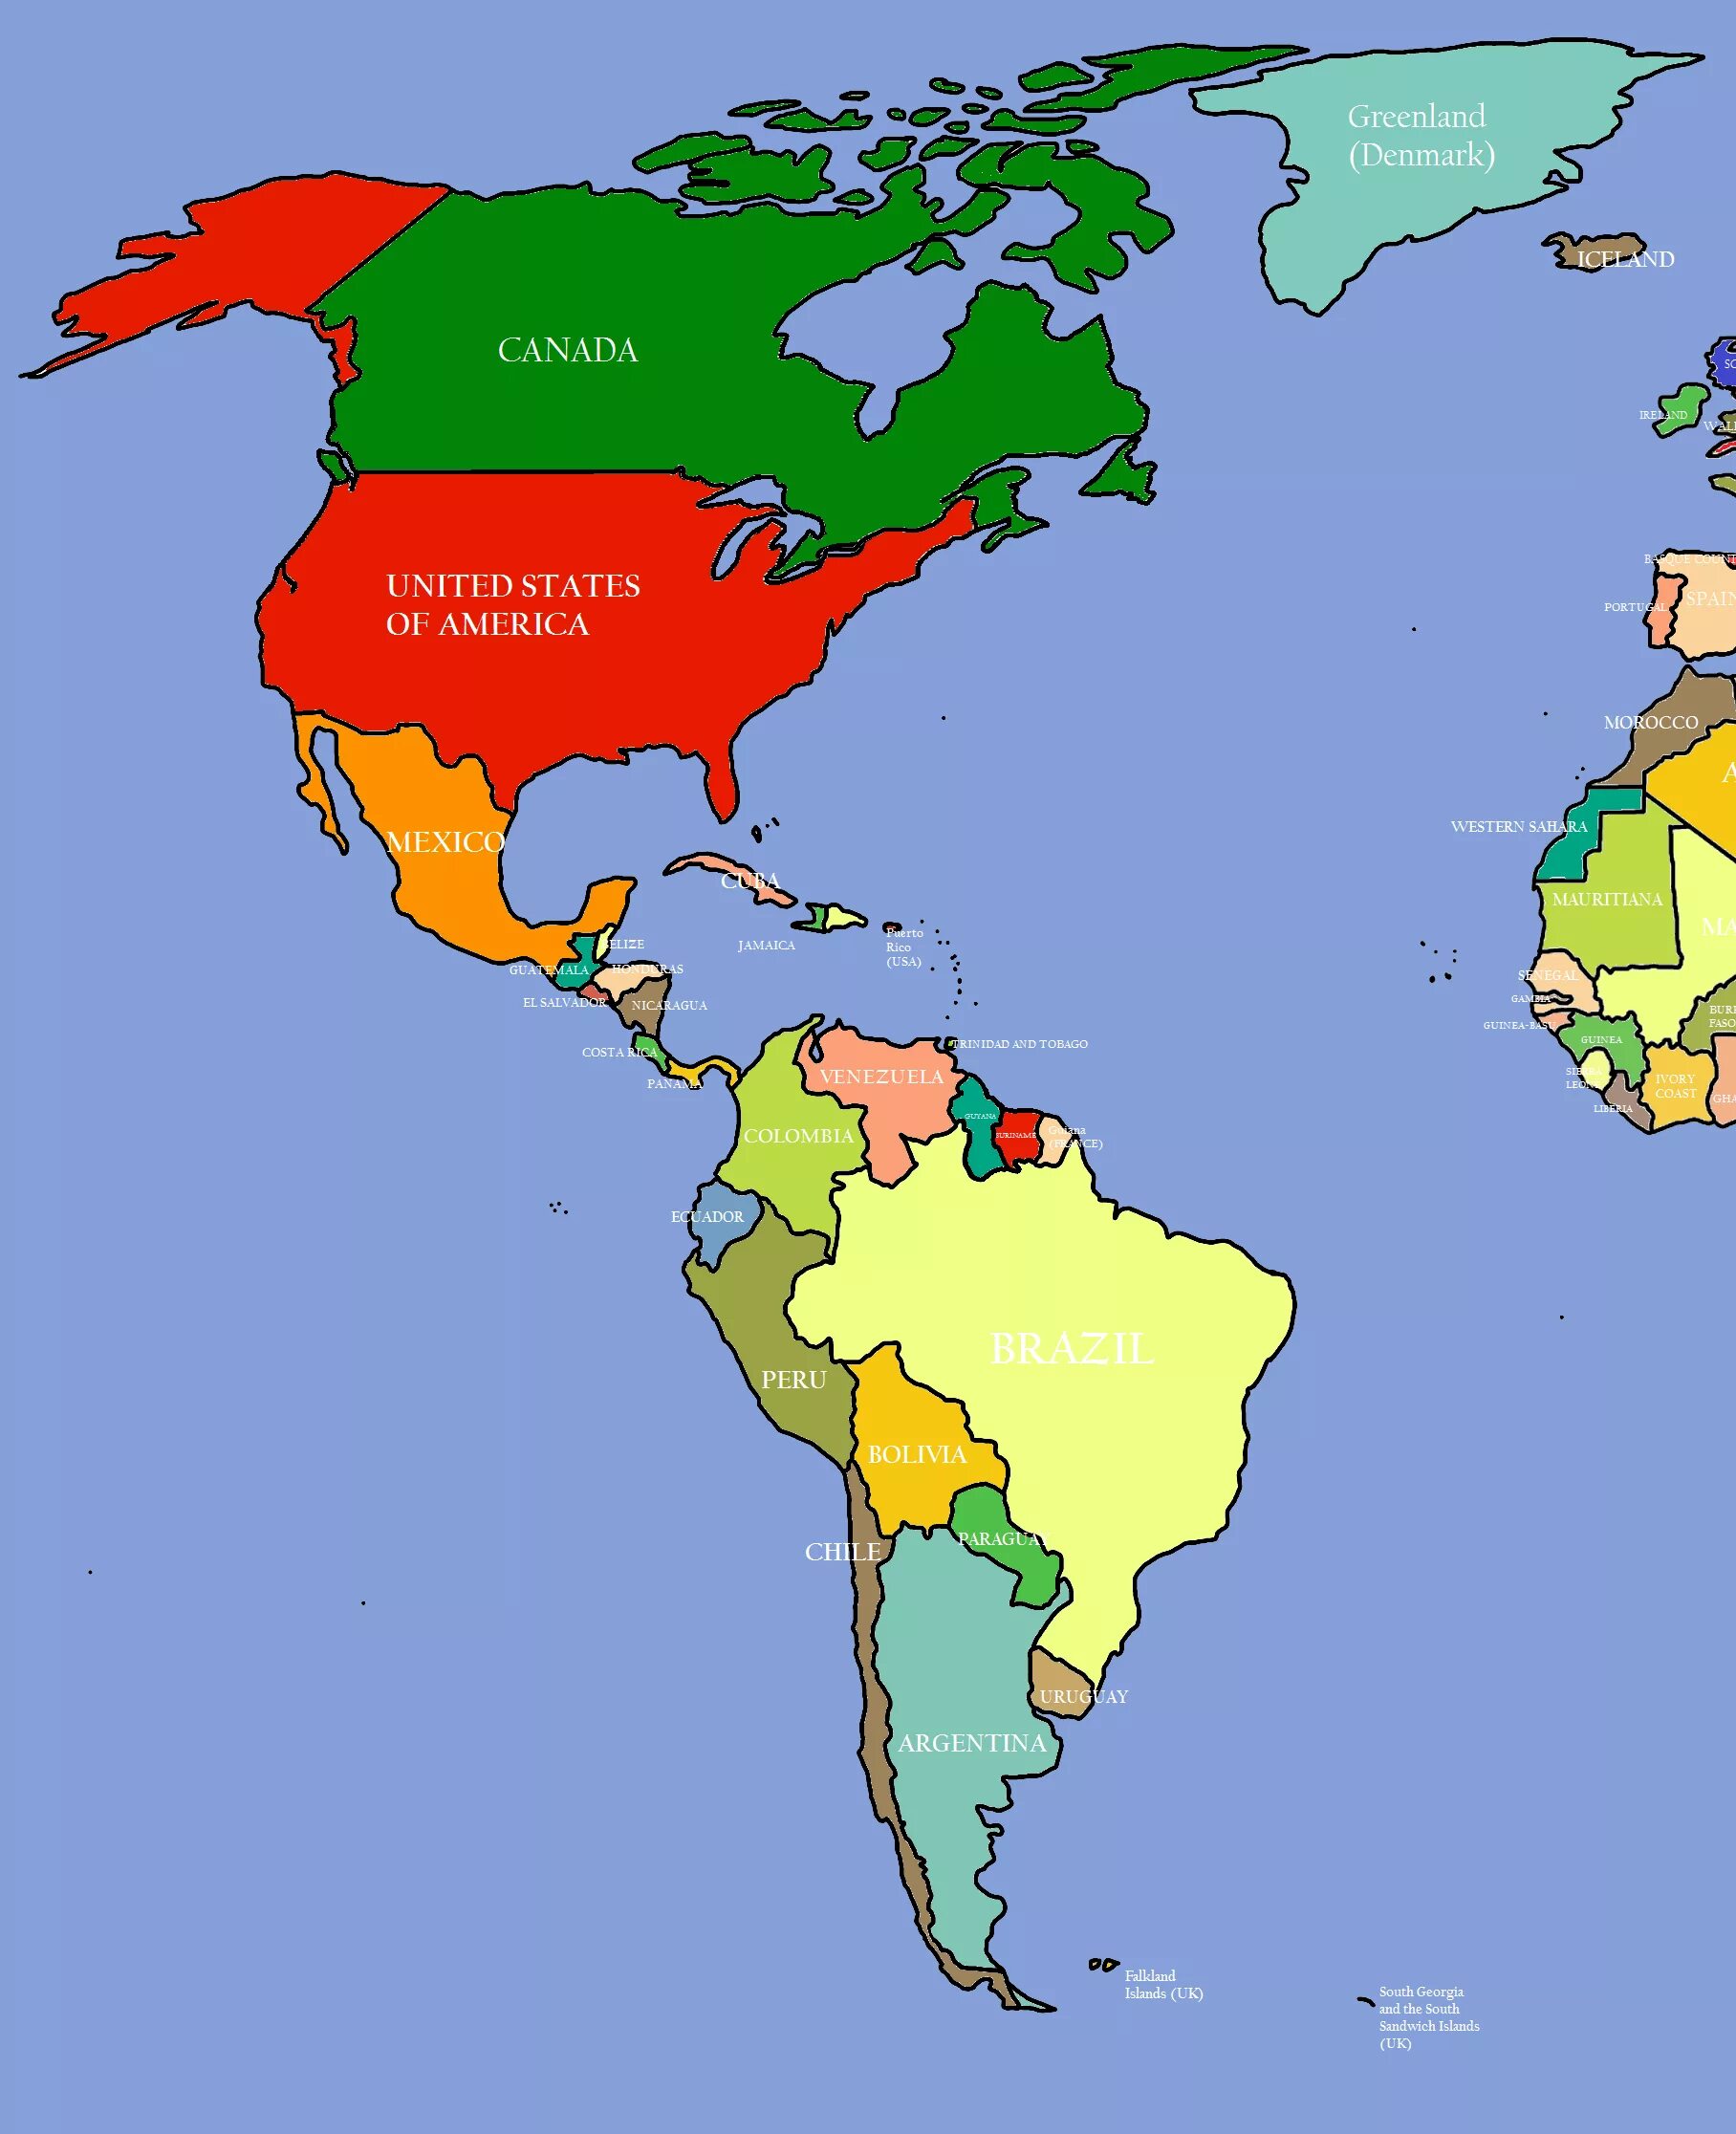 Самая развитая страна северной америки. Континент Америка на карте. Северная Америка и Южная Америка на карте. Континенты Северная и Южная Америка. Материк Америка на карте.